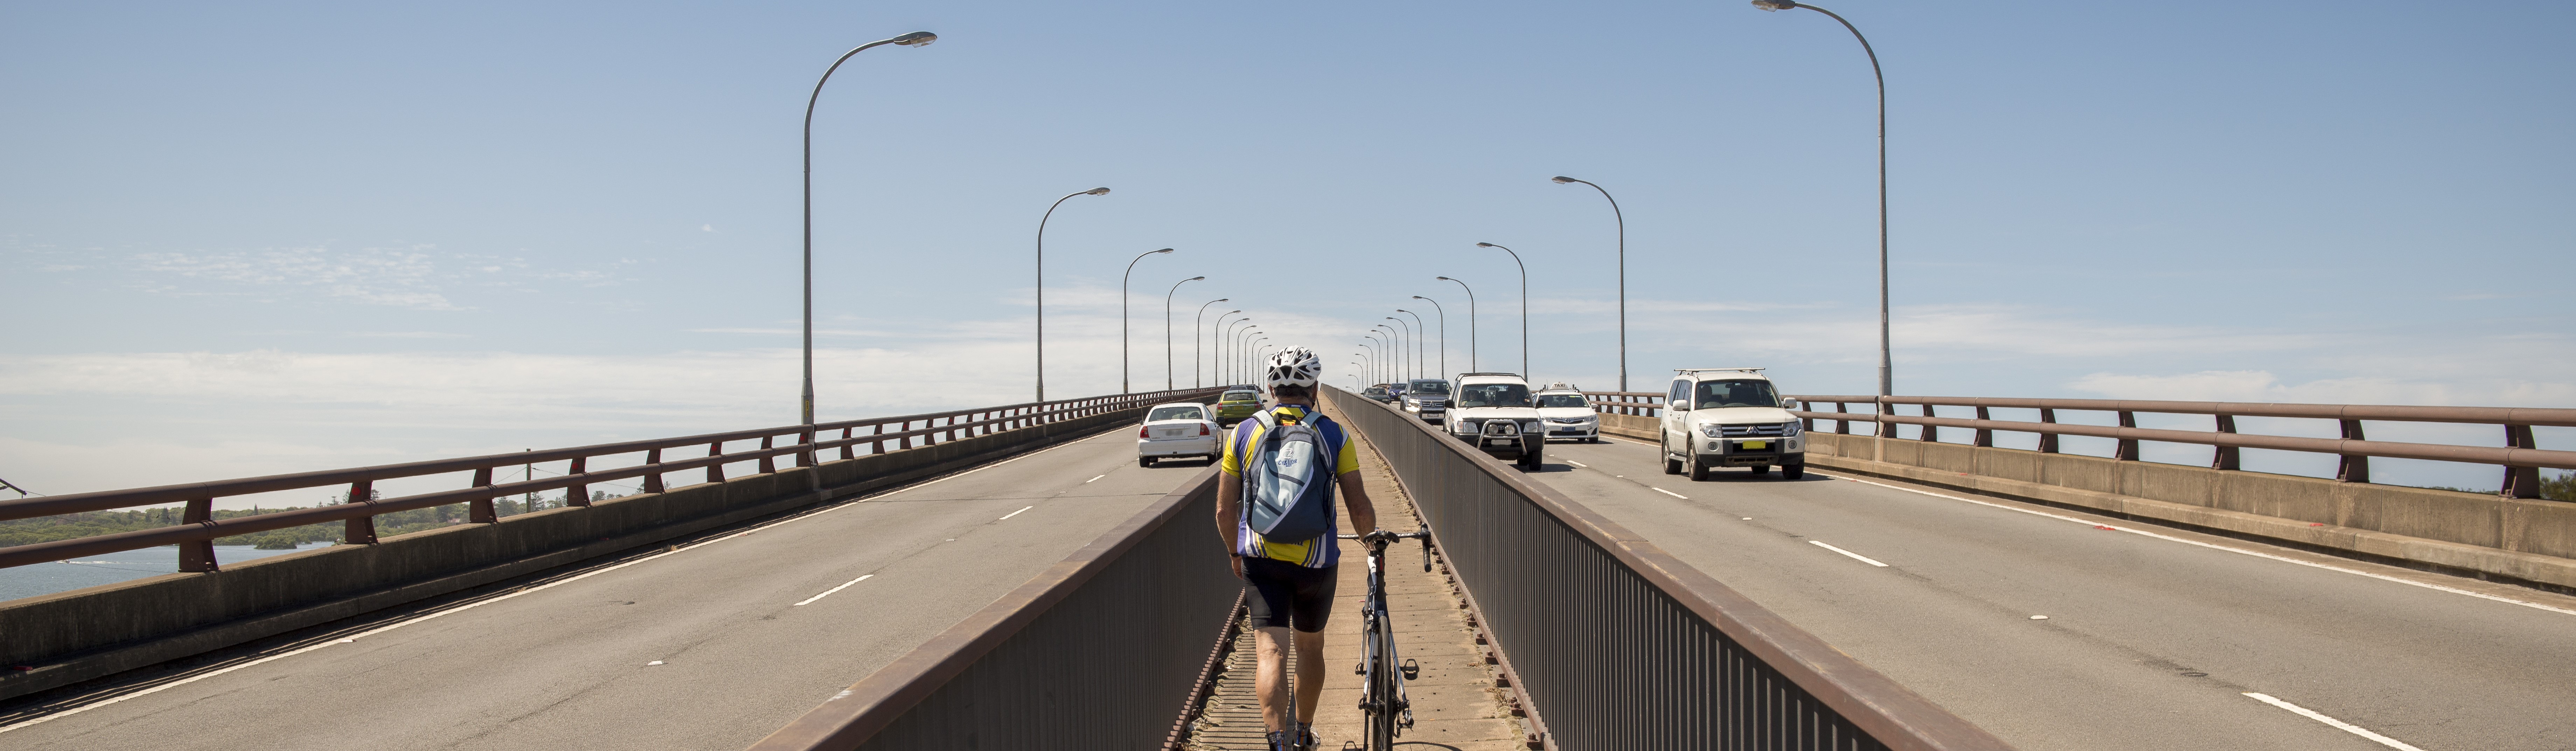 Cyclist walks over bridge with bike, cars on road